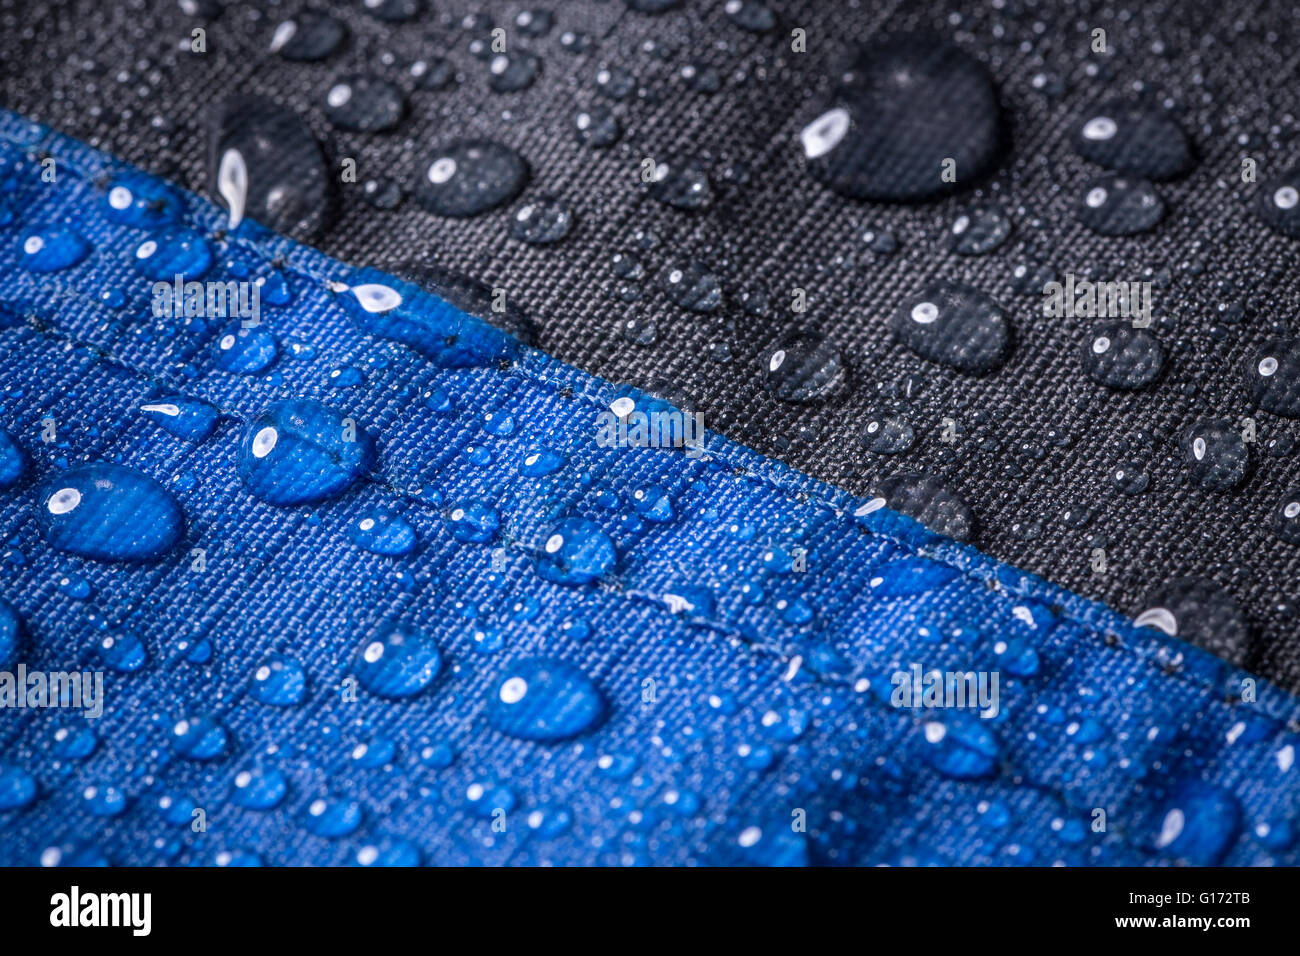 Las gotas de agua de lluvia en tejido impermeable y fibra Foto de stock